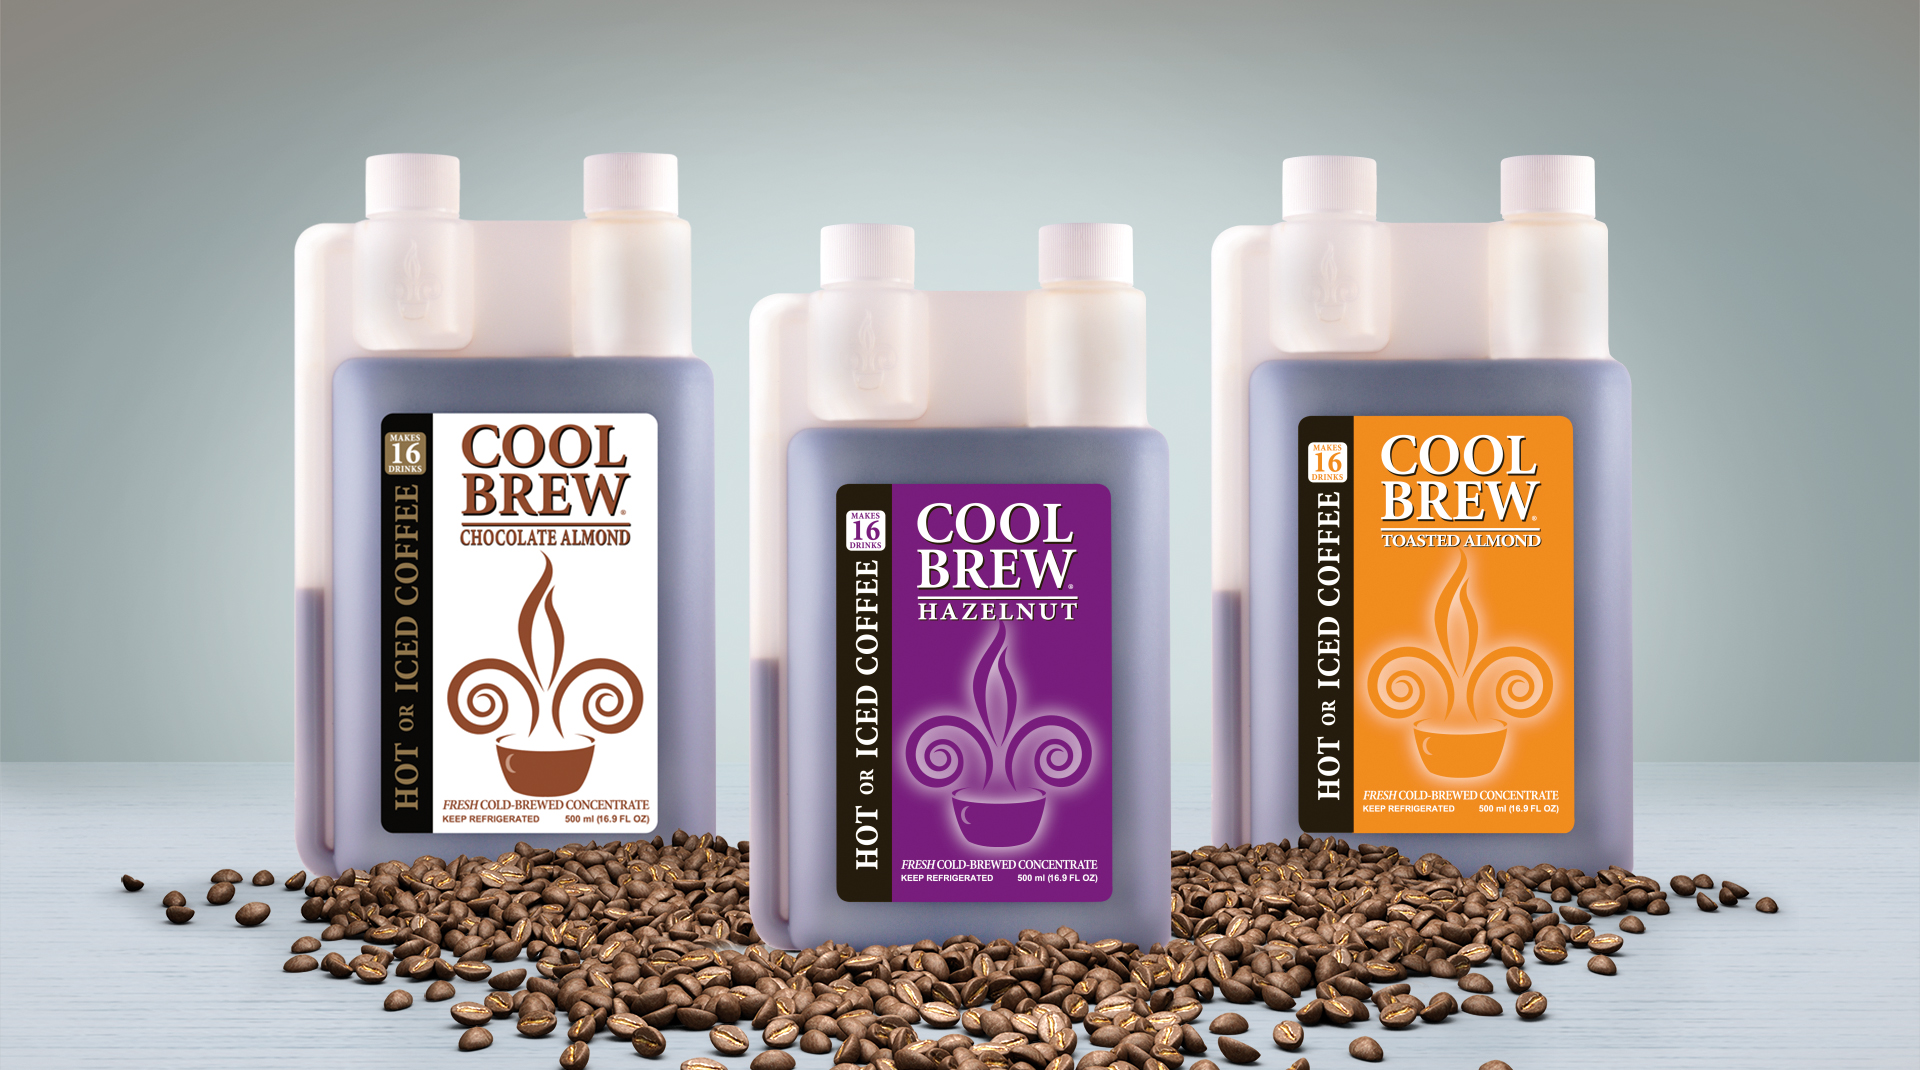 CoolBrew Mocha Hot or Iced Coffee, 16.9 fl oz. Cold Brewed Coffee. 